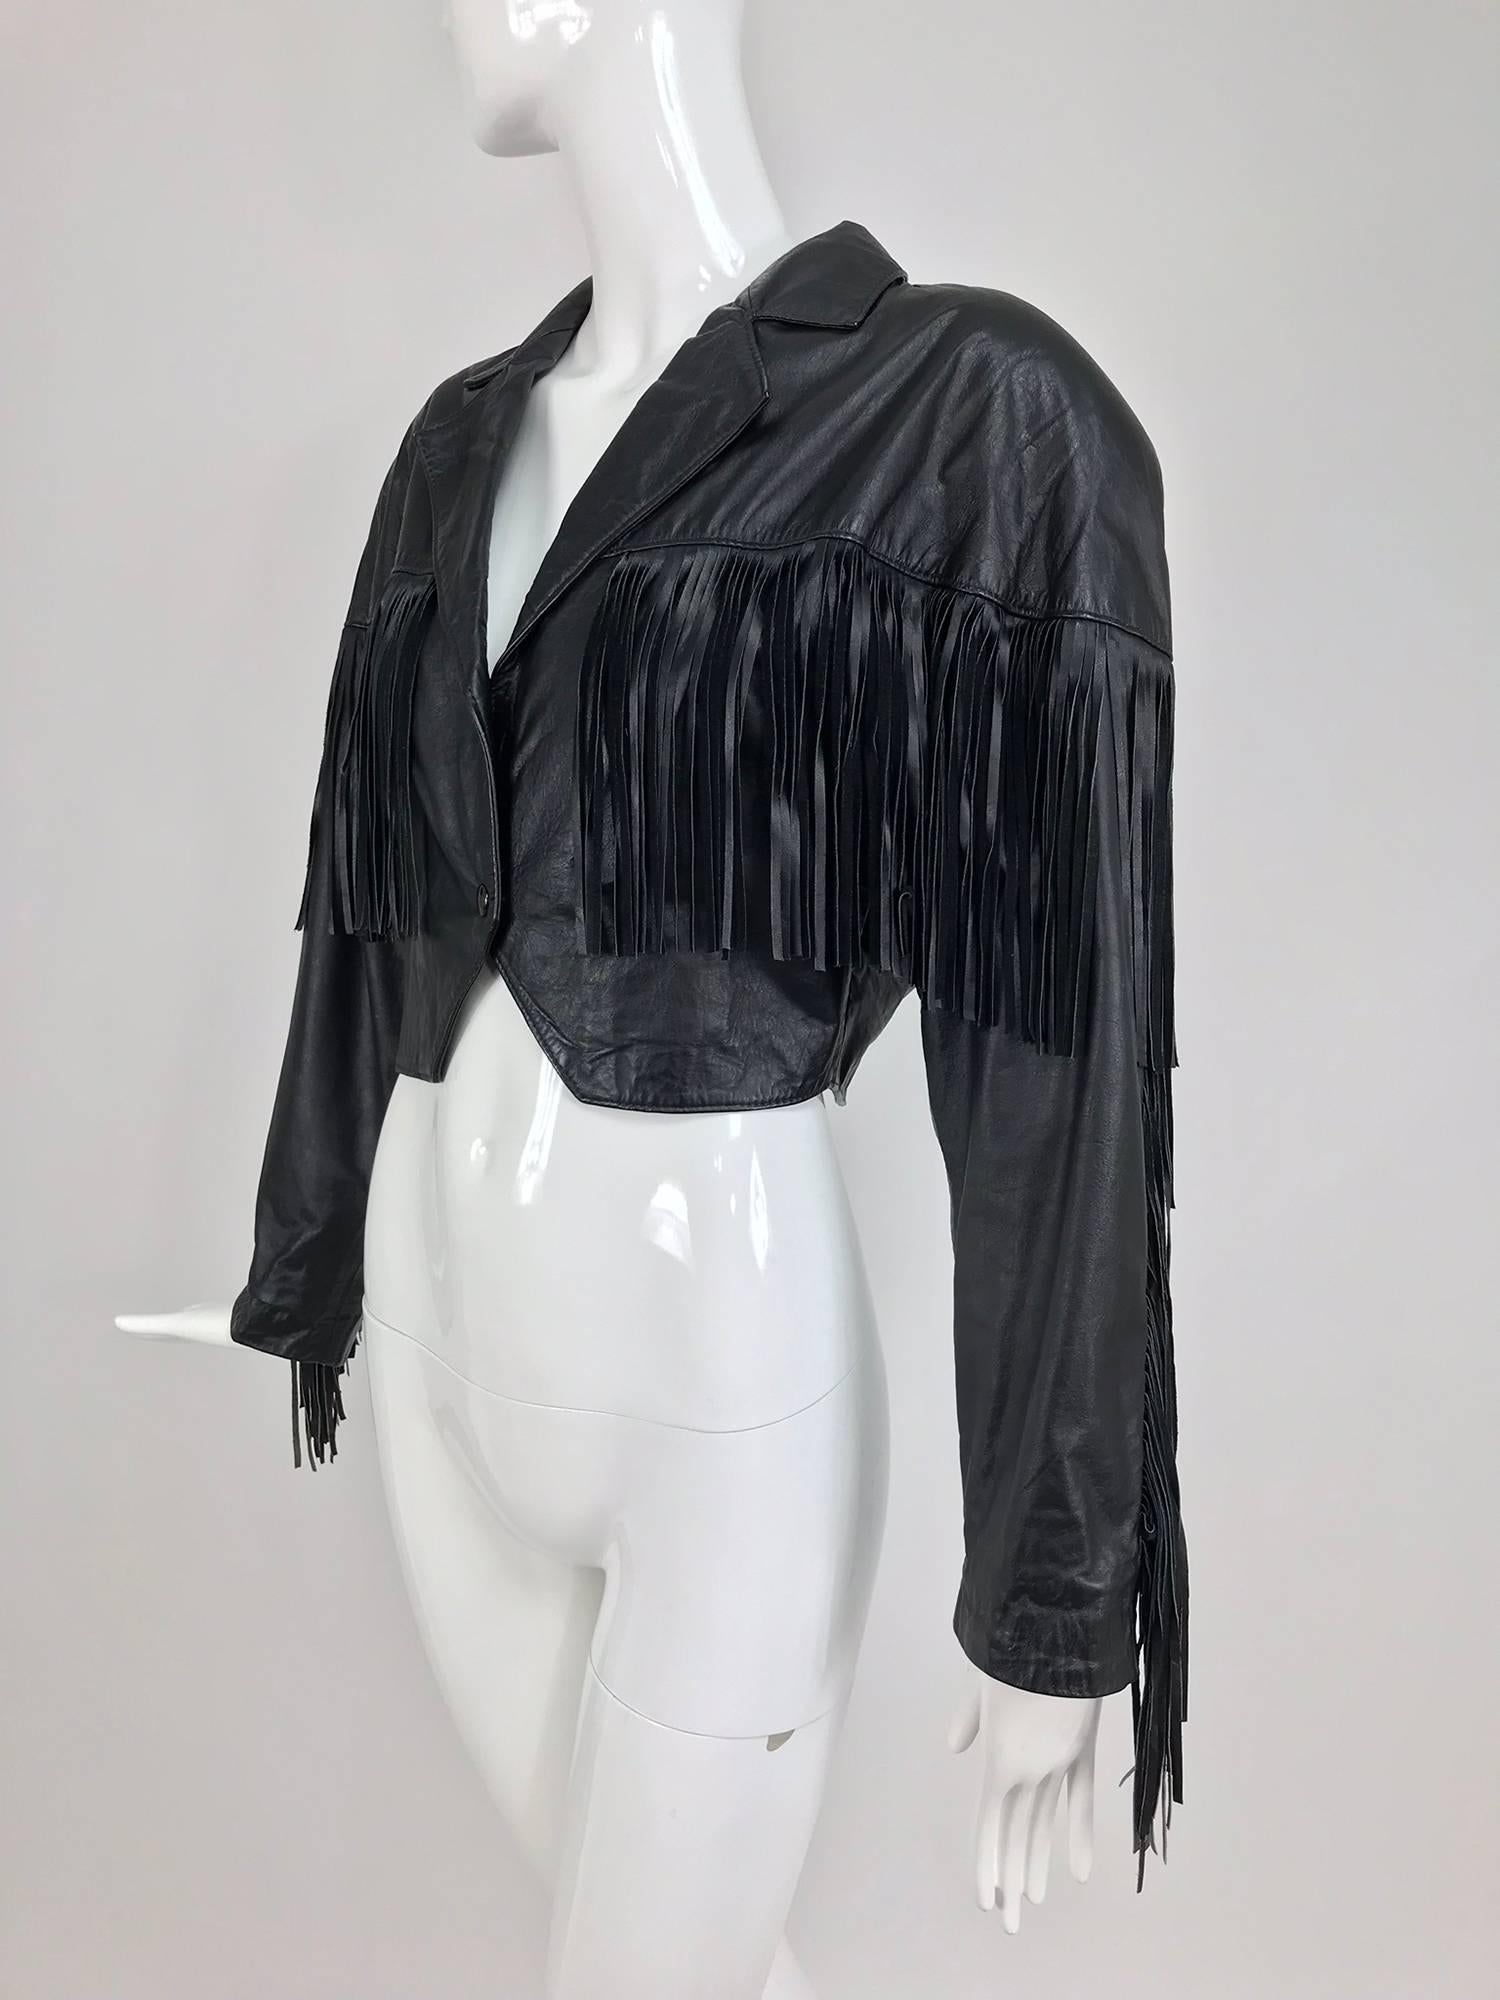 Maziar Betty Boop cowgirl black fringe leather jacket 1980s 5